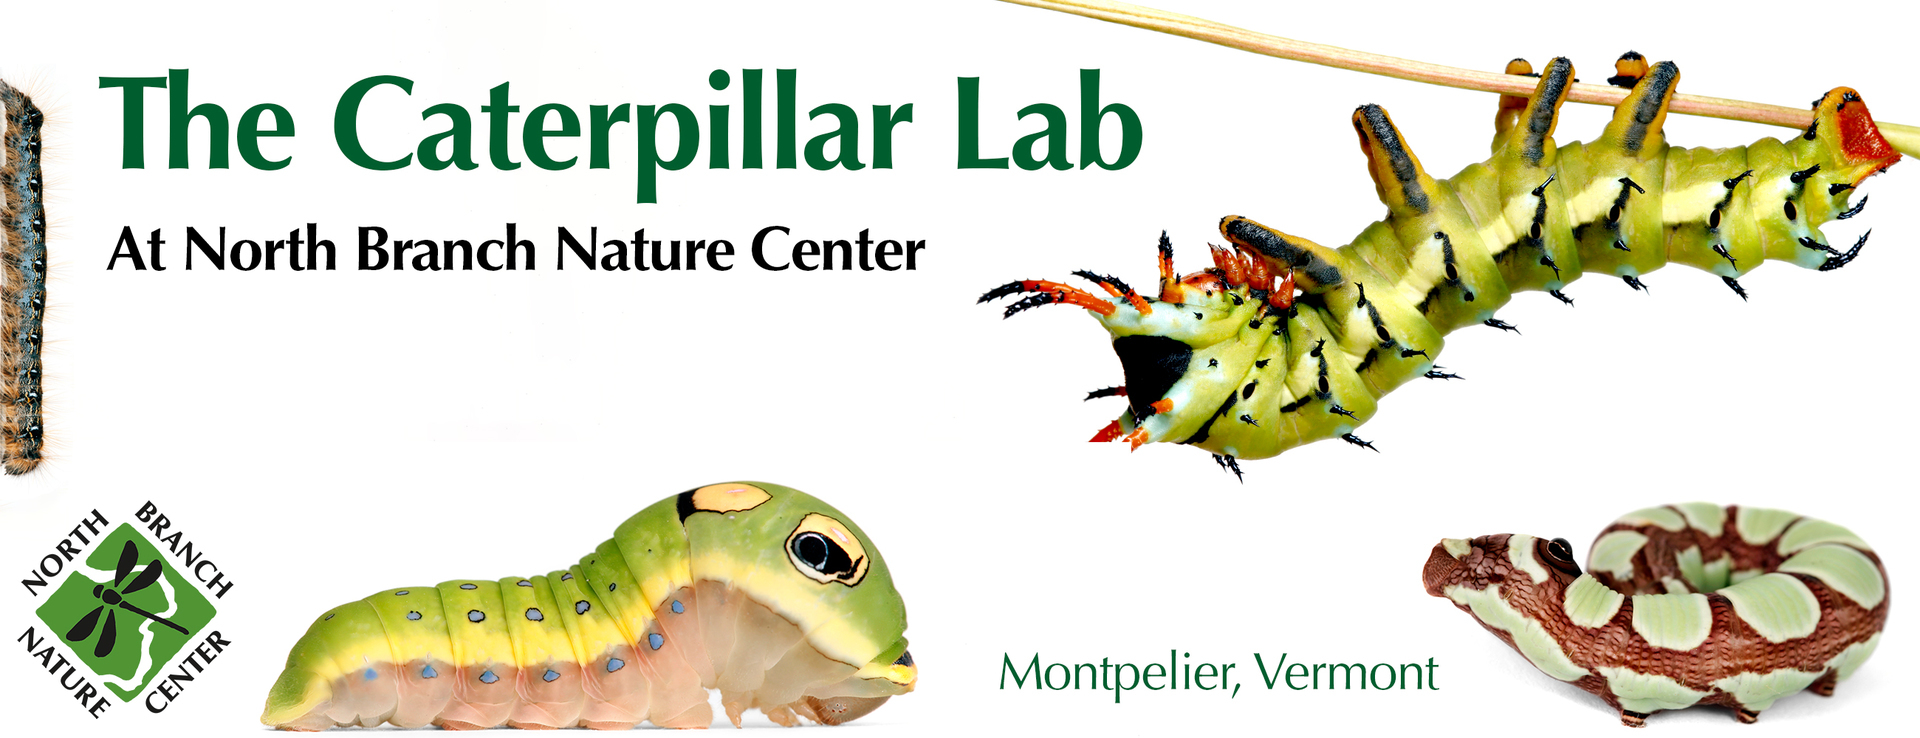 The Caterpillar Lab, Montpelier, Vermont, United States